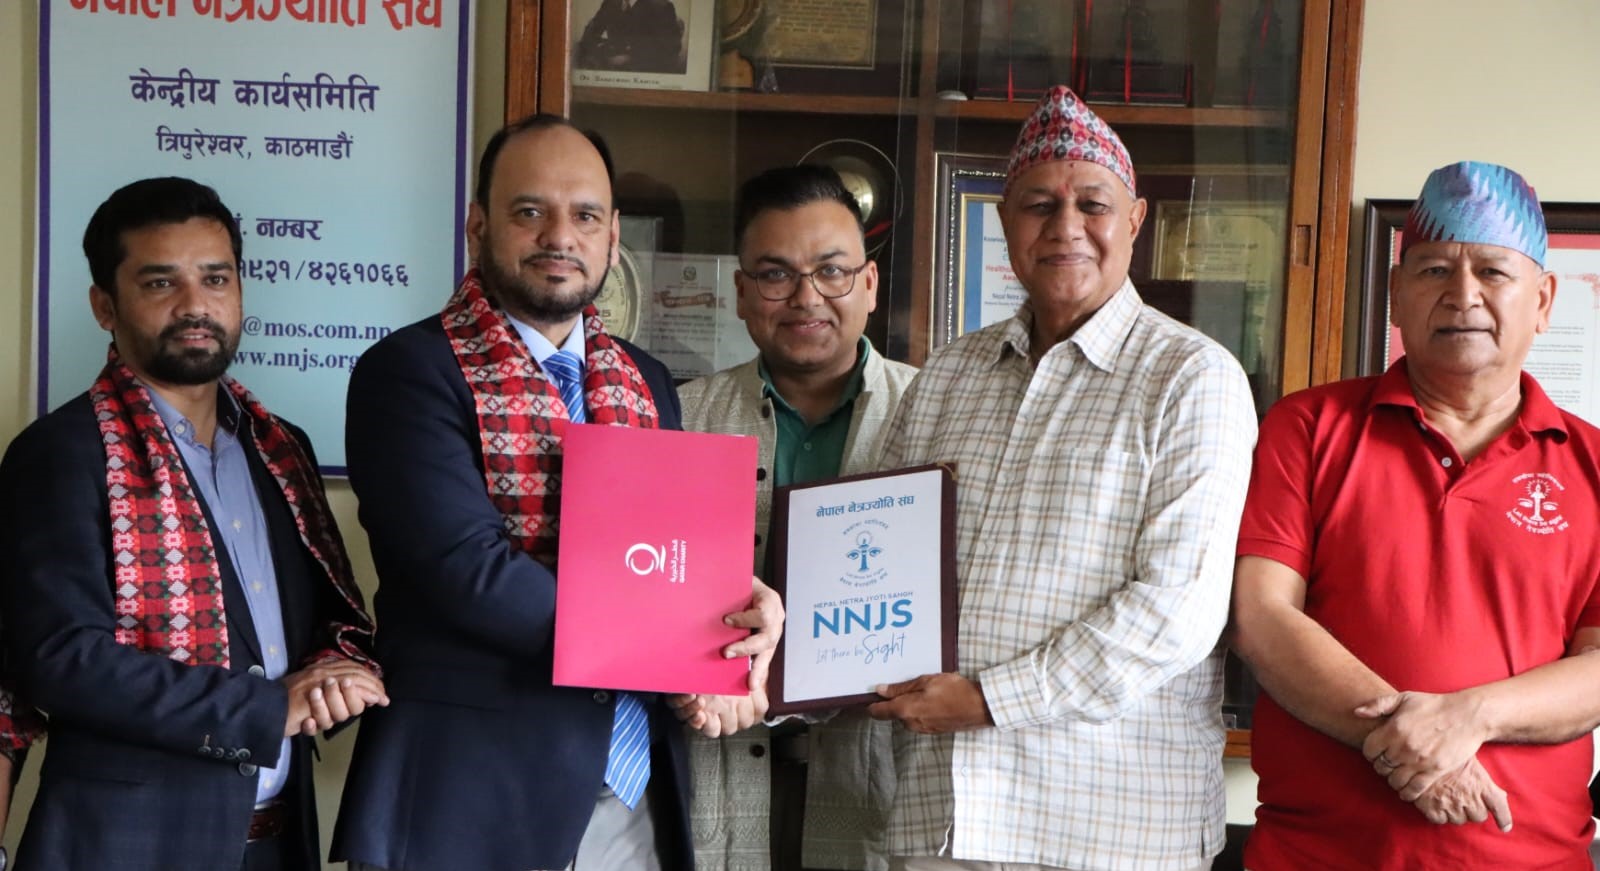 नेपाल नेत्रज्योति संघ र कतार च्यारिटीबीच सम्झौता, २२ सय बिरामीको निःशुल्क शल्यक्रिया हुने